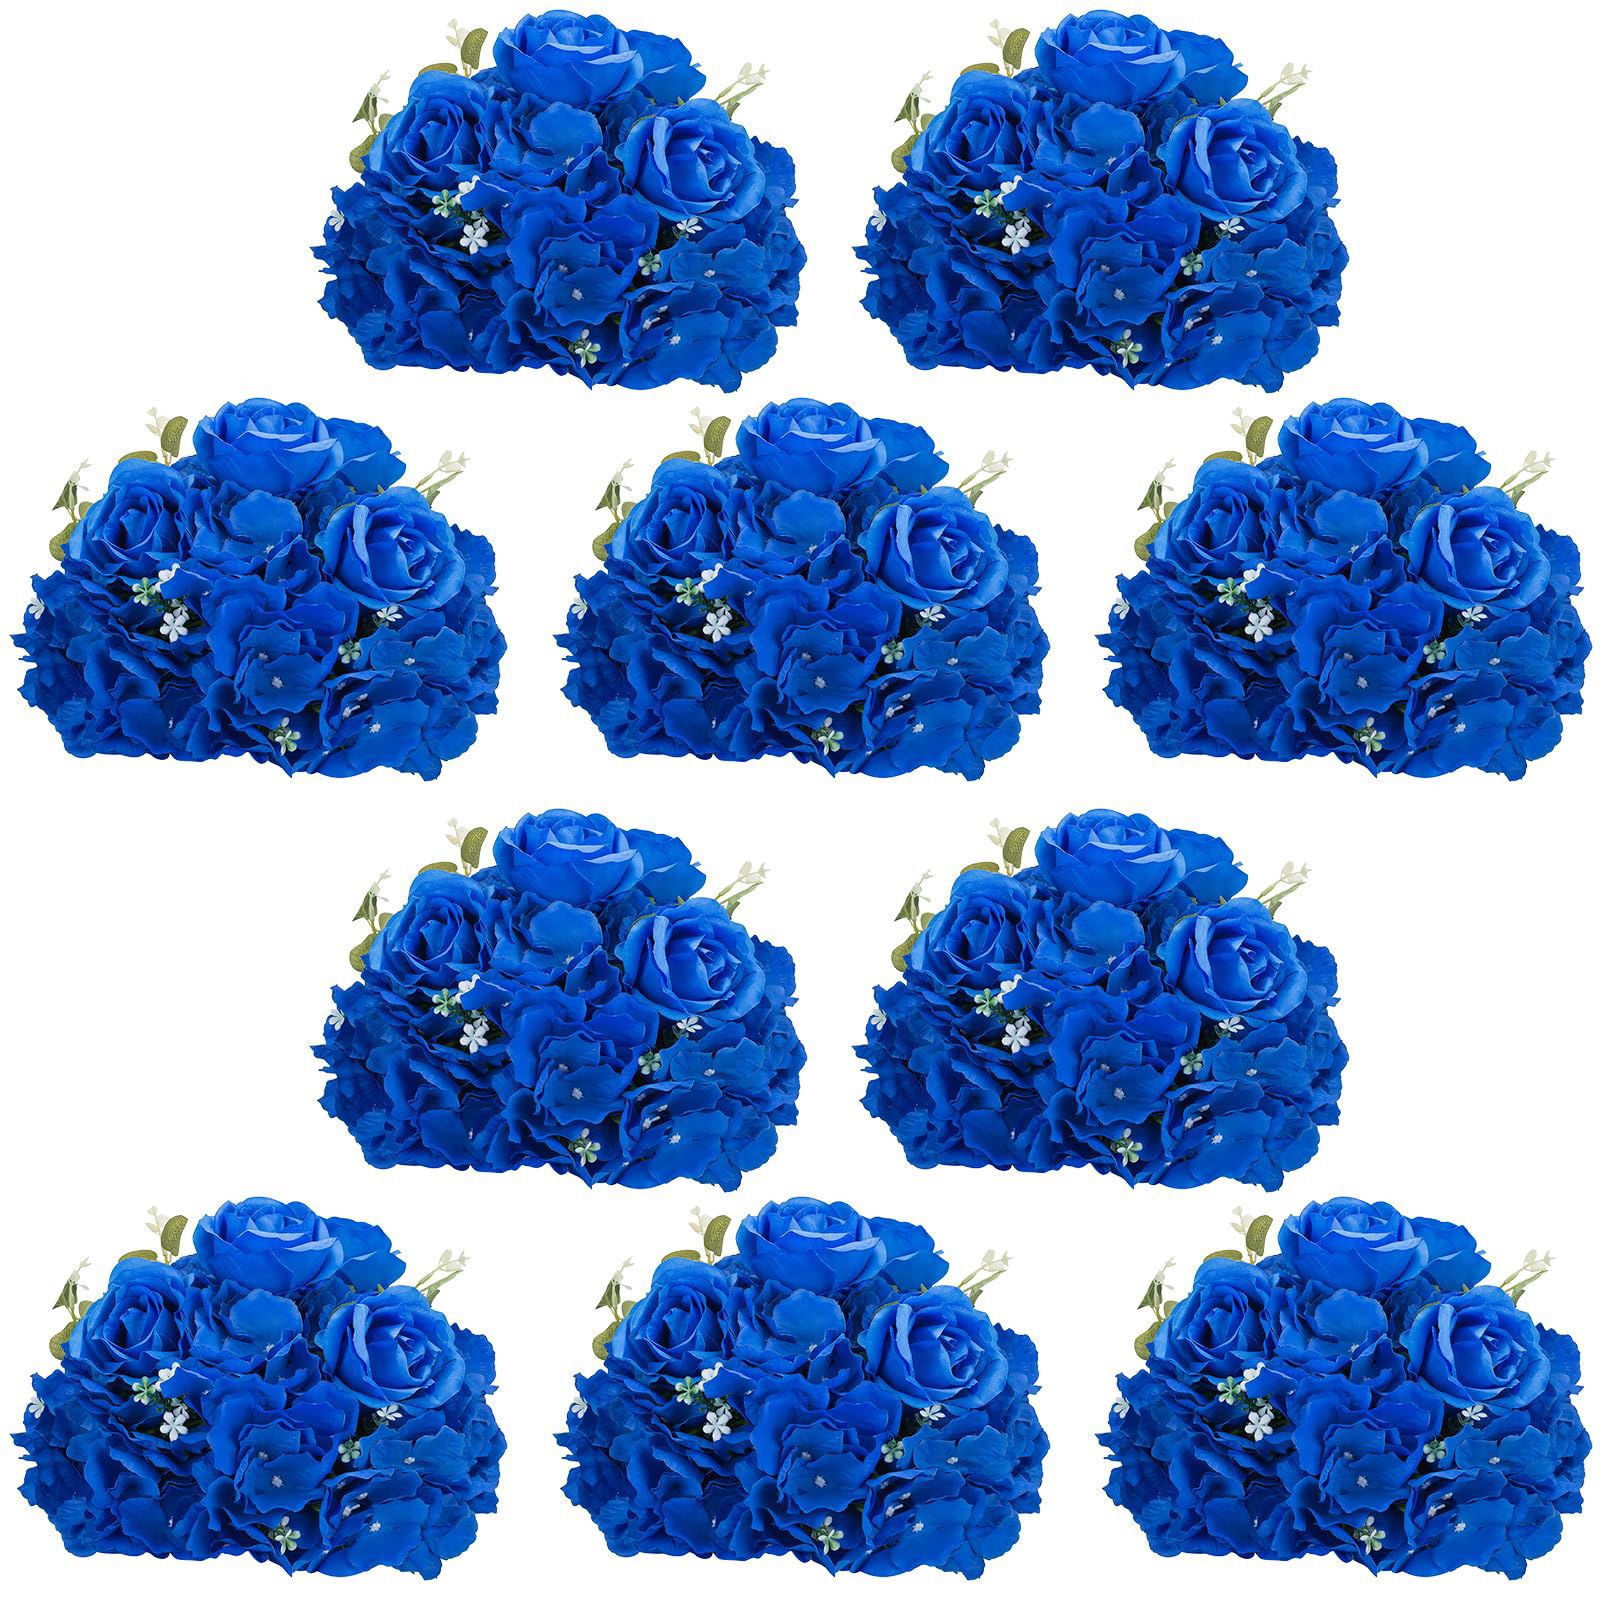 NUPTIO Royal Blue Flowers For Centerpieces: 10 Pcs 11.8 Inch Diam Artificial Flower Balls For Centerpieces - Fake Flower Ball Arrangement Bouquet Rose